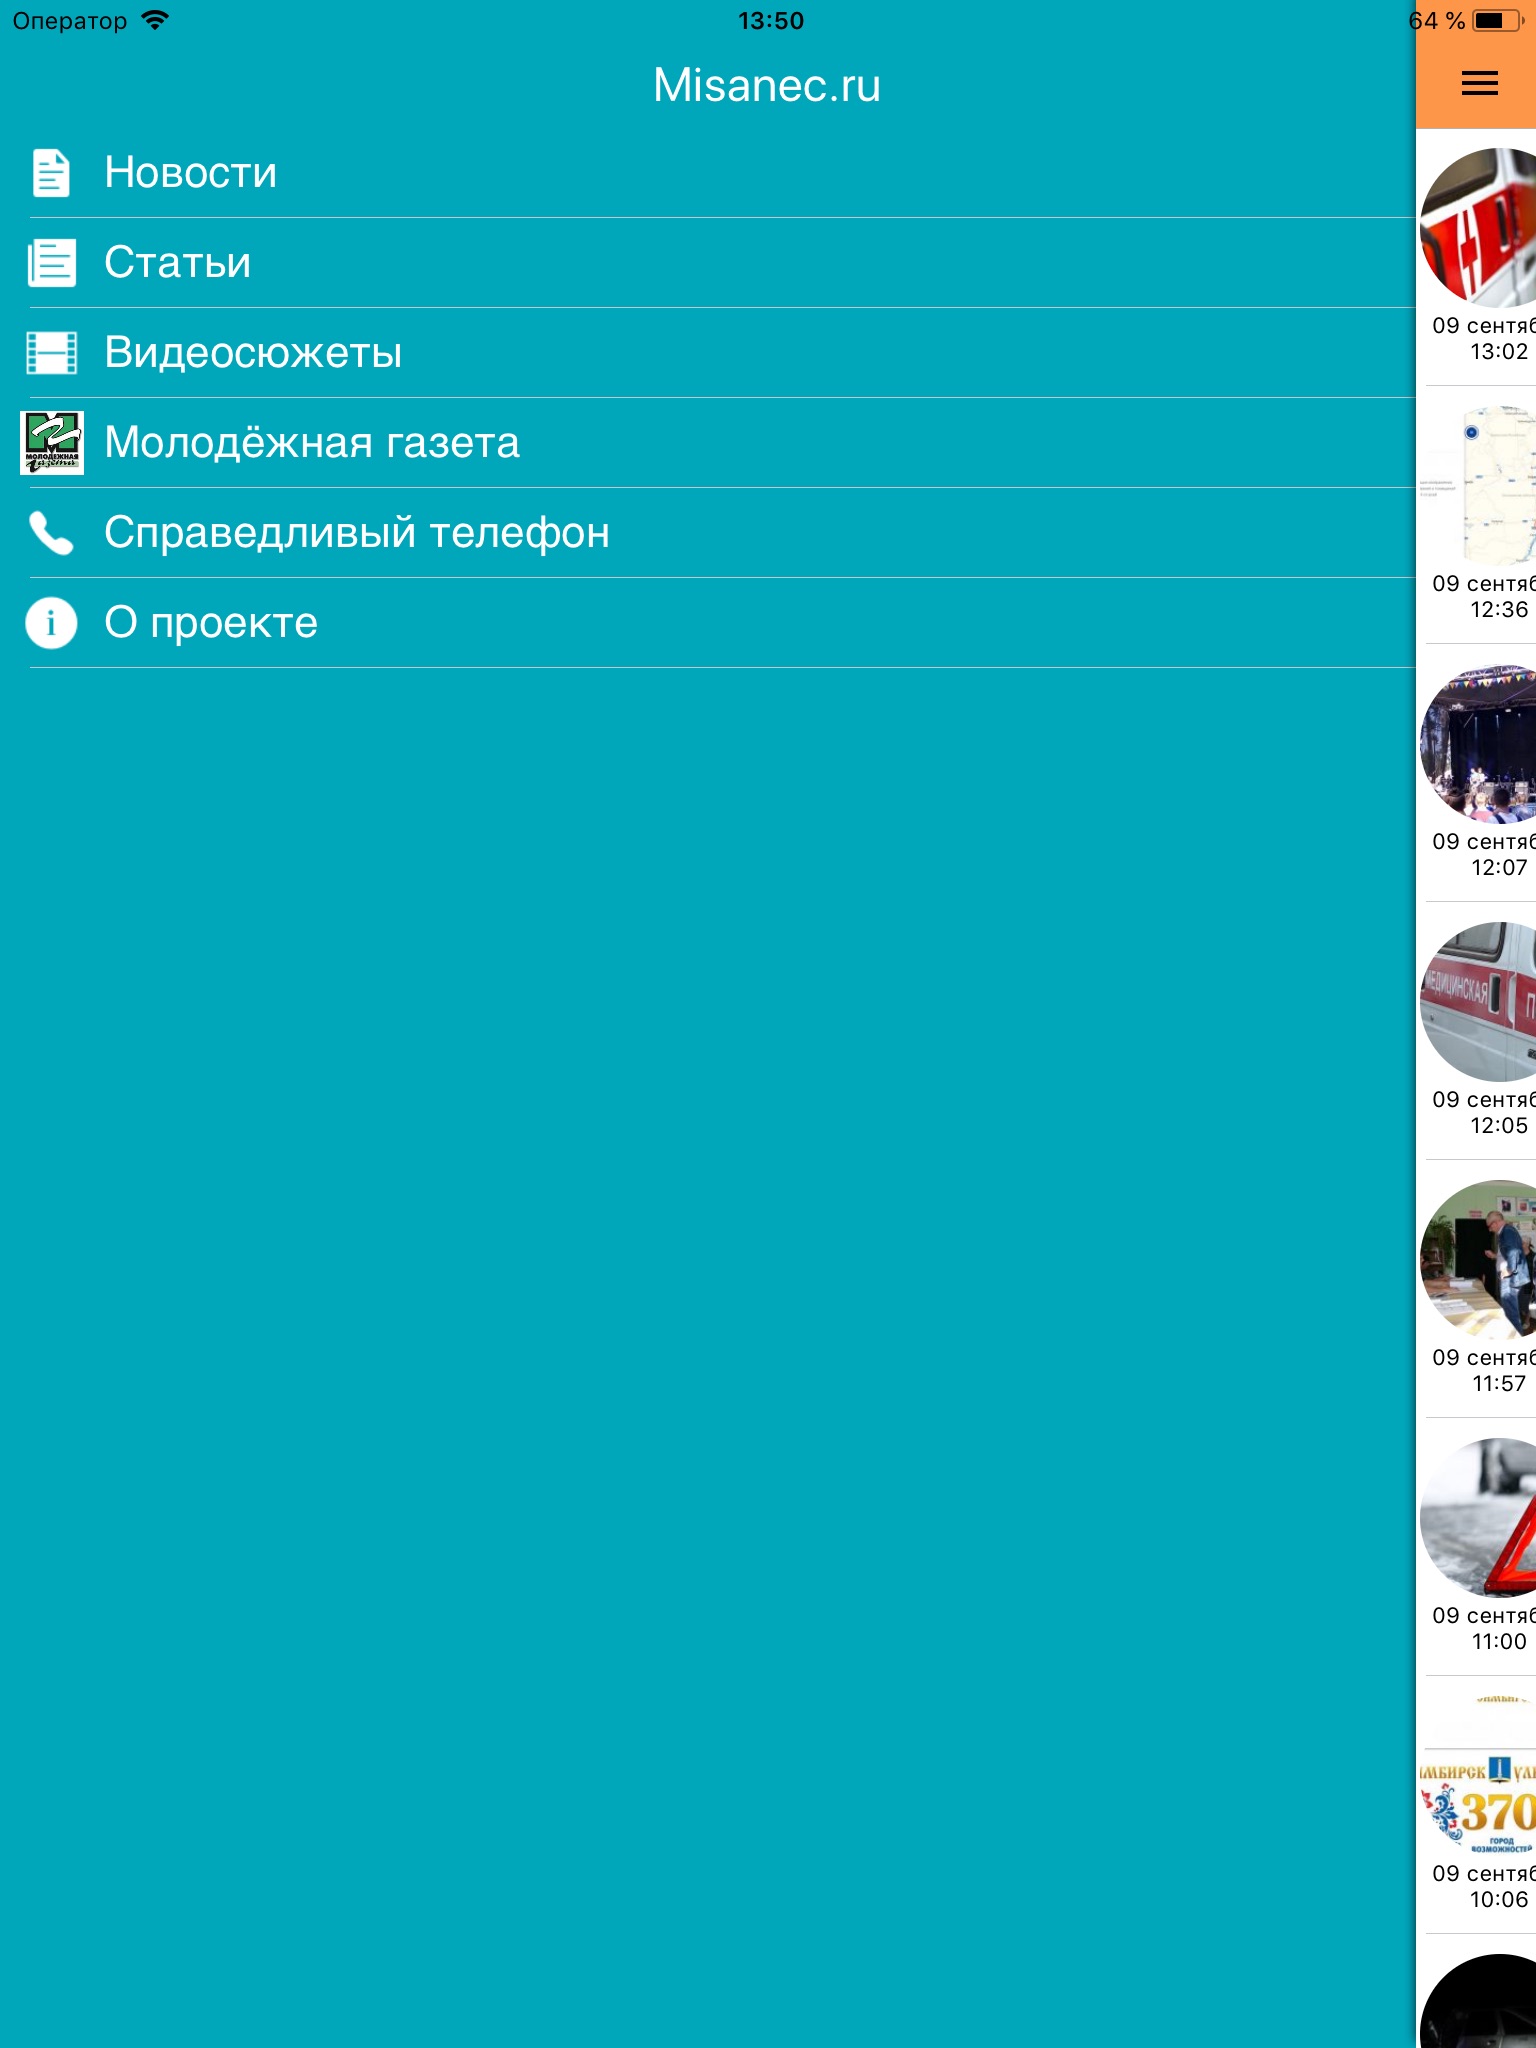 Misanec.ru Новости Ульяновска screenshot 3